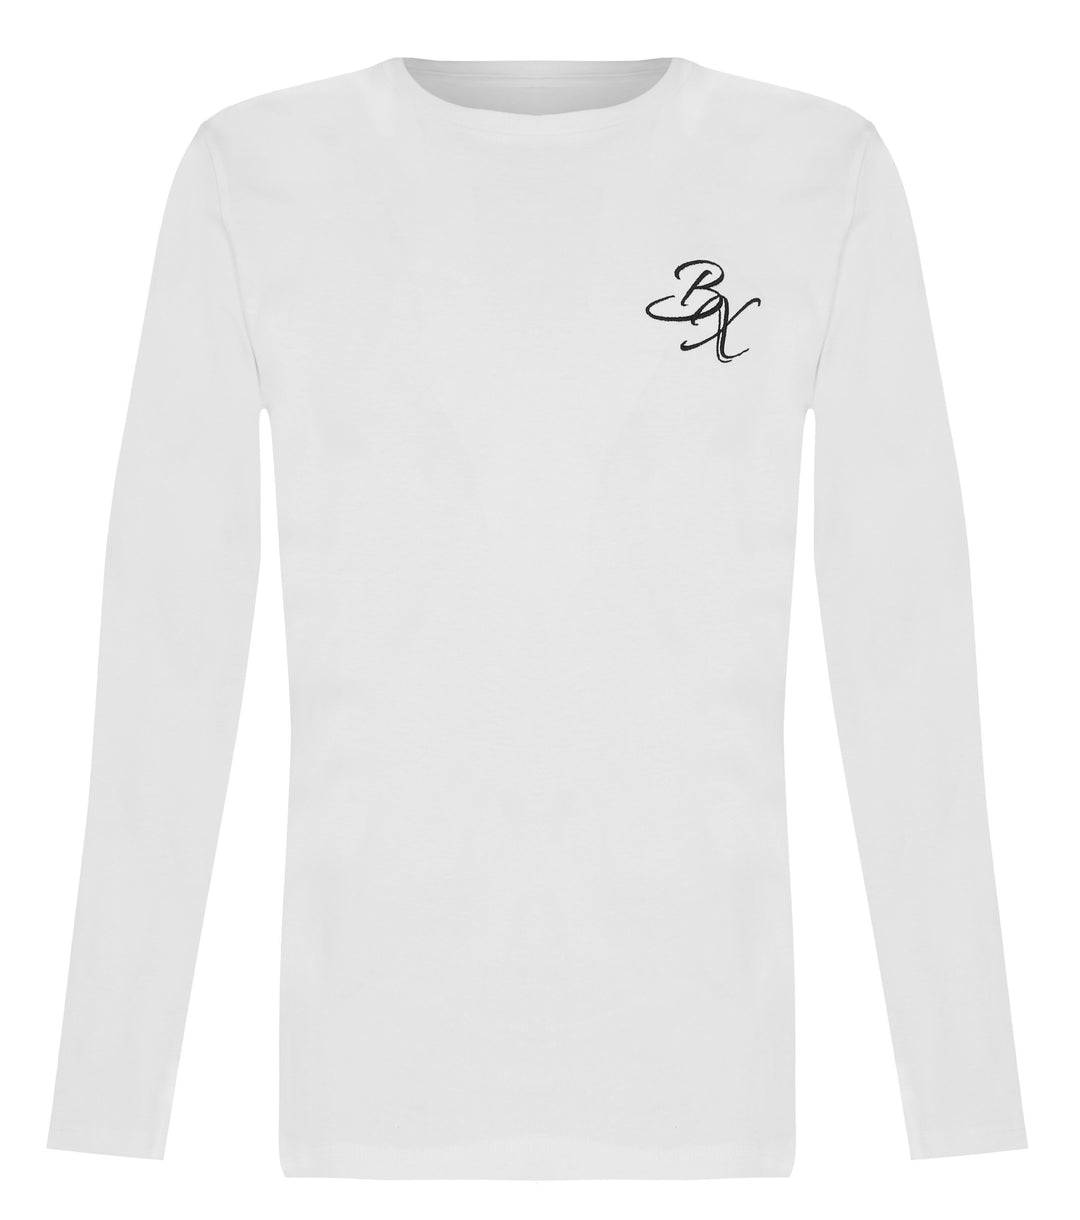 BX Original Long Sleeve T-shirt - White - Adapt Avenue